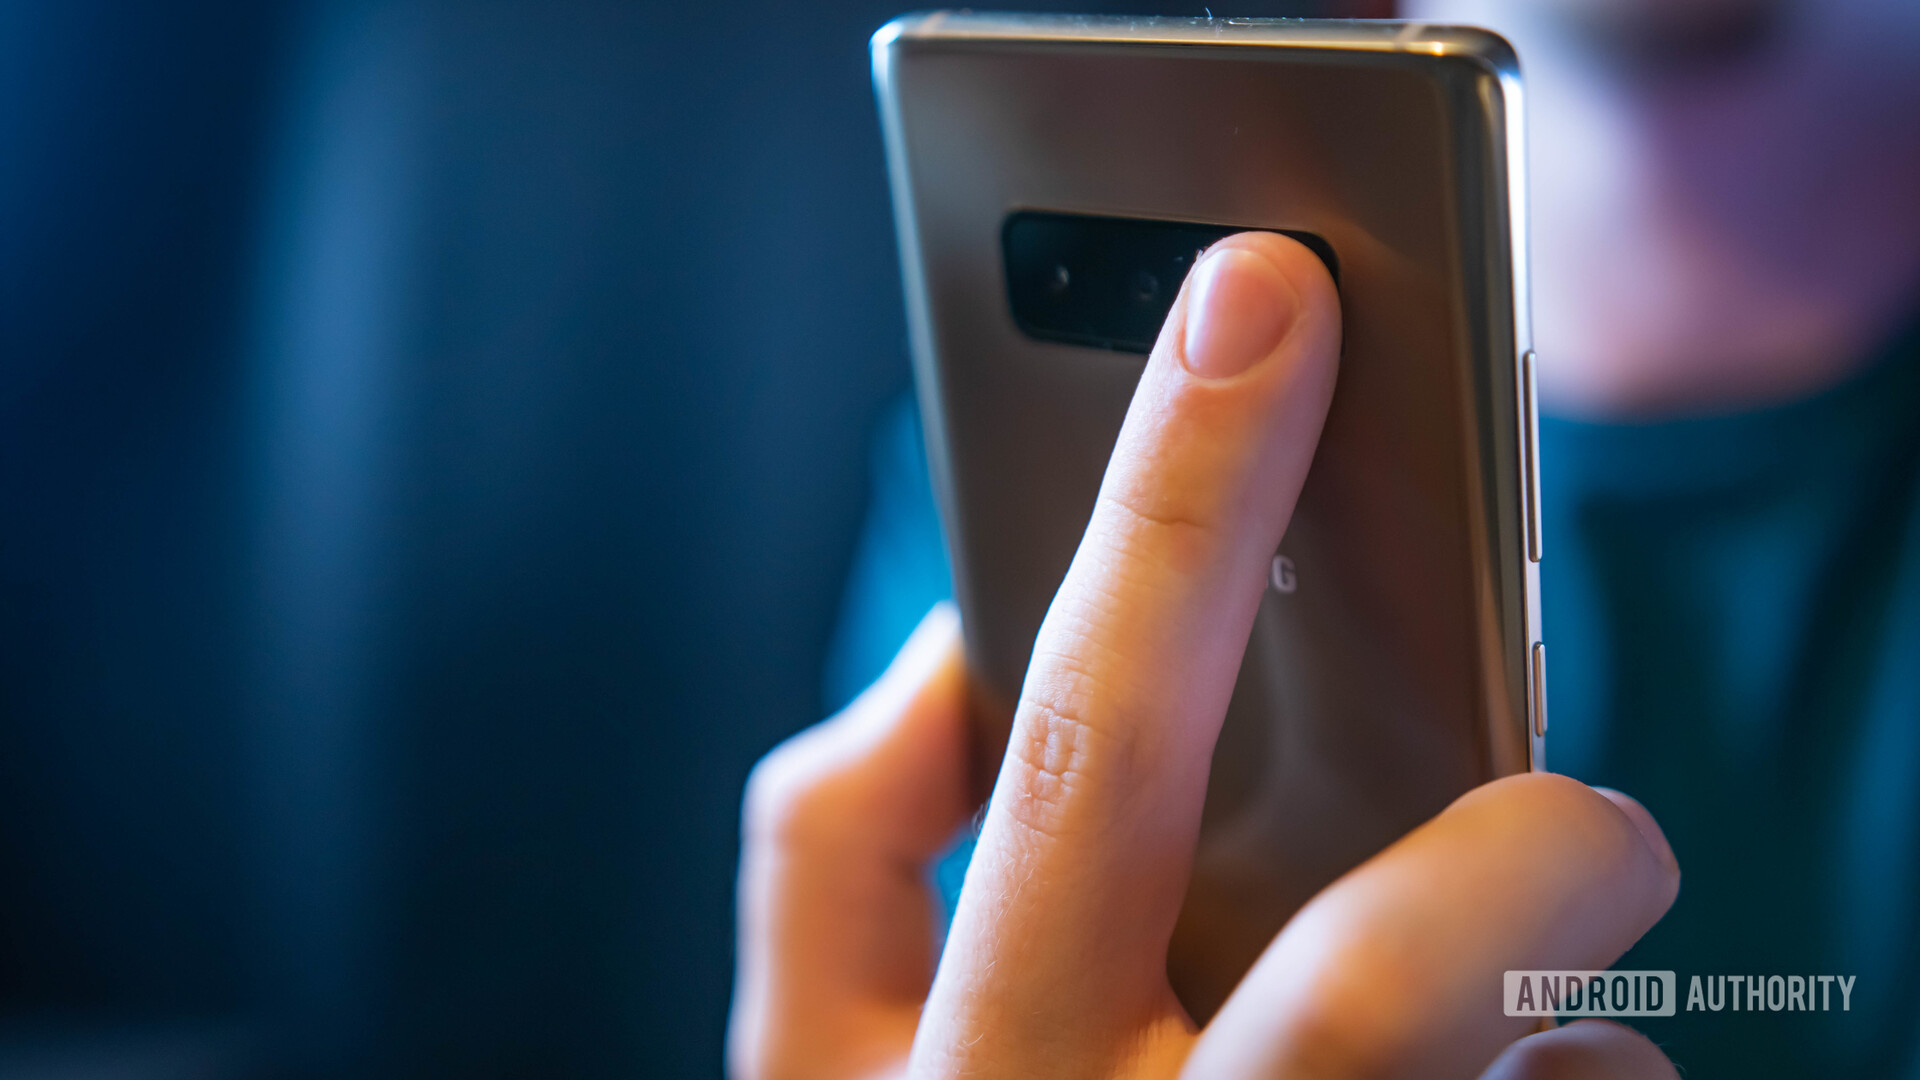 Samsung Galaxy Note 8 rear fingerprint sensor gold color